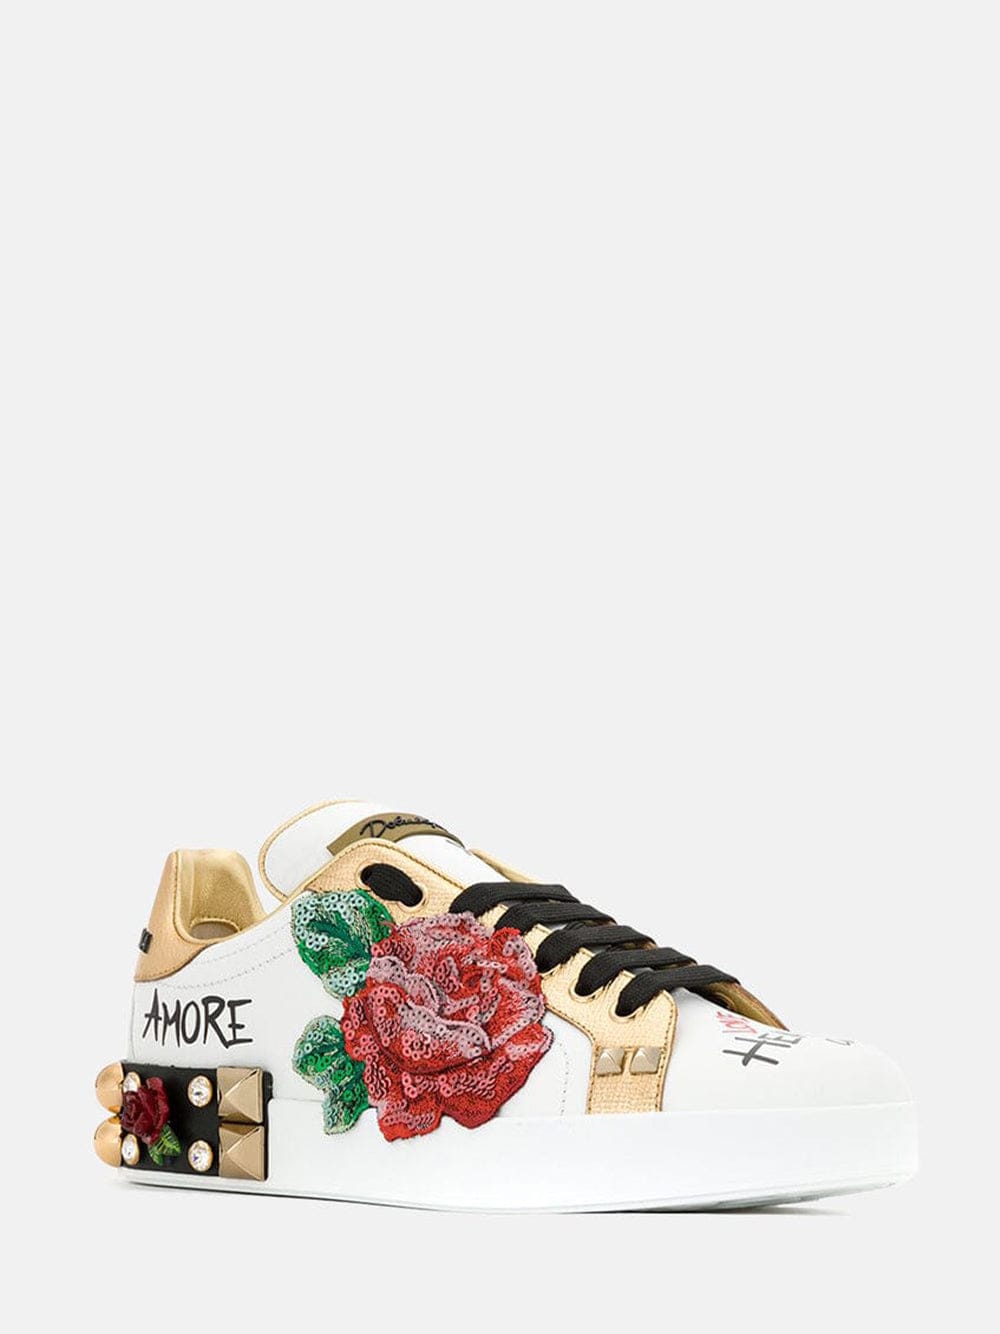 Dolce & Gabbana Portofino Rose Patch Sneakers